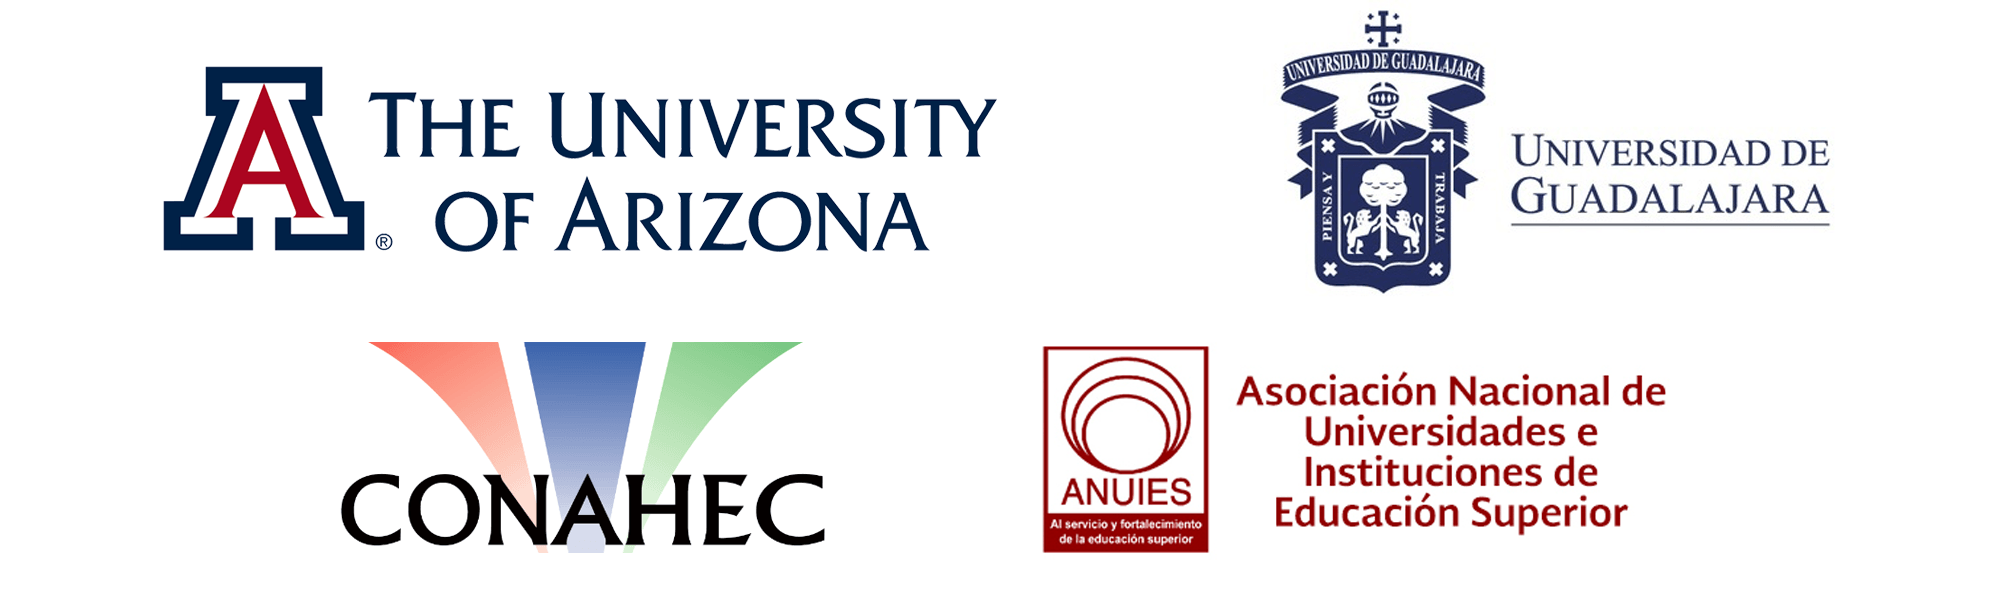 Arizona Strong Logo - University of Arizona, Tucson, Arizona – 100,000 Strong in the Americas